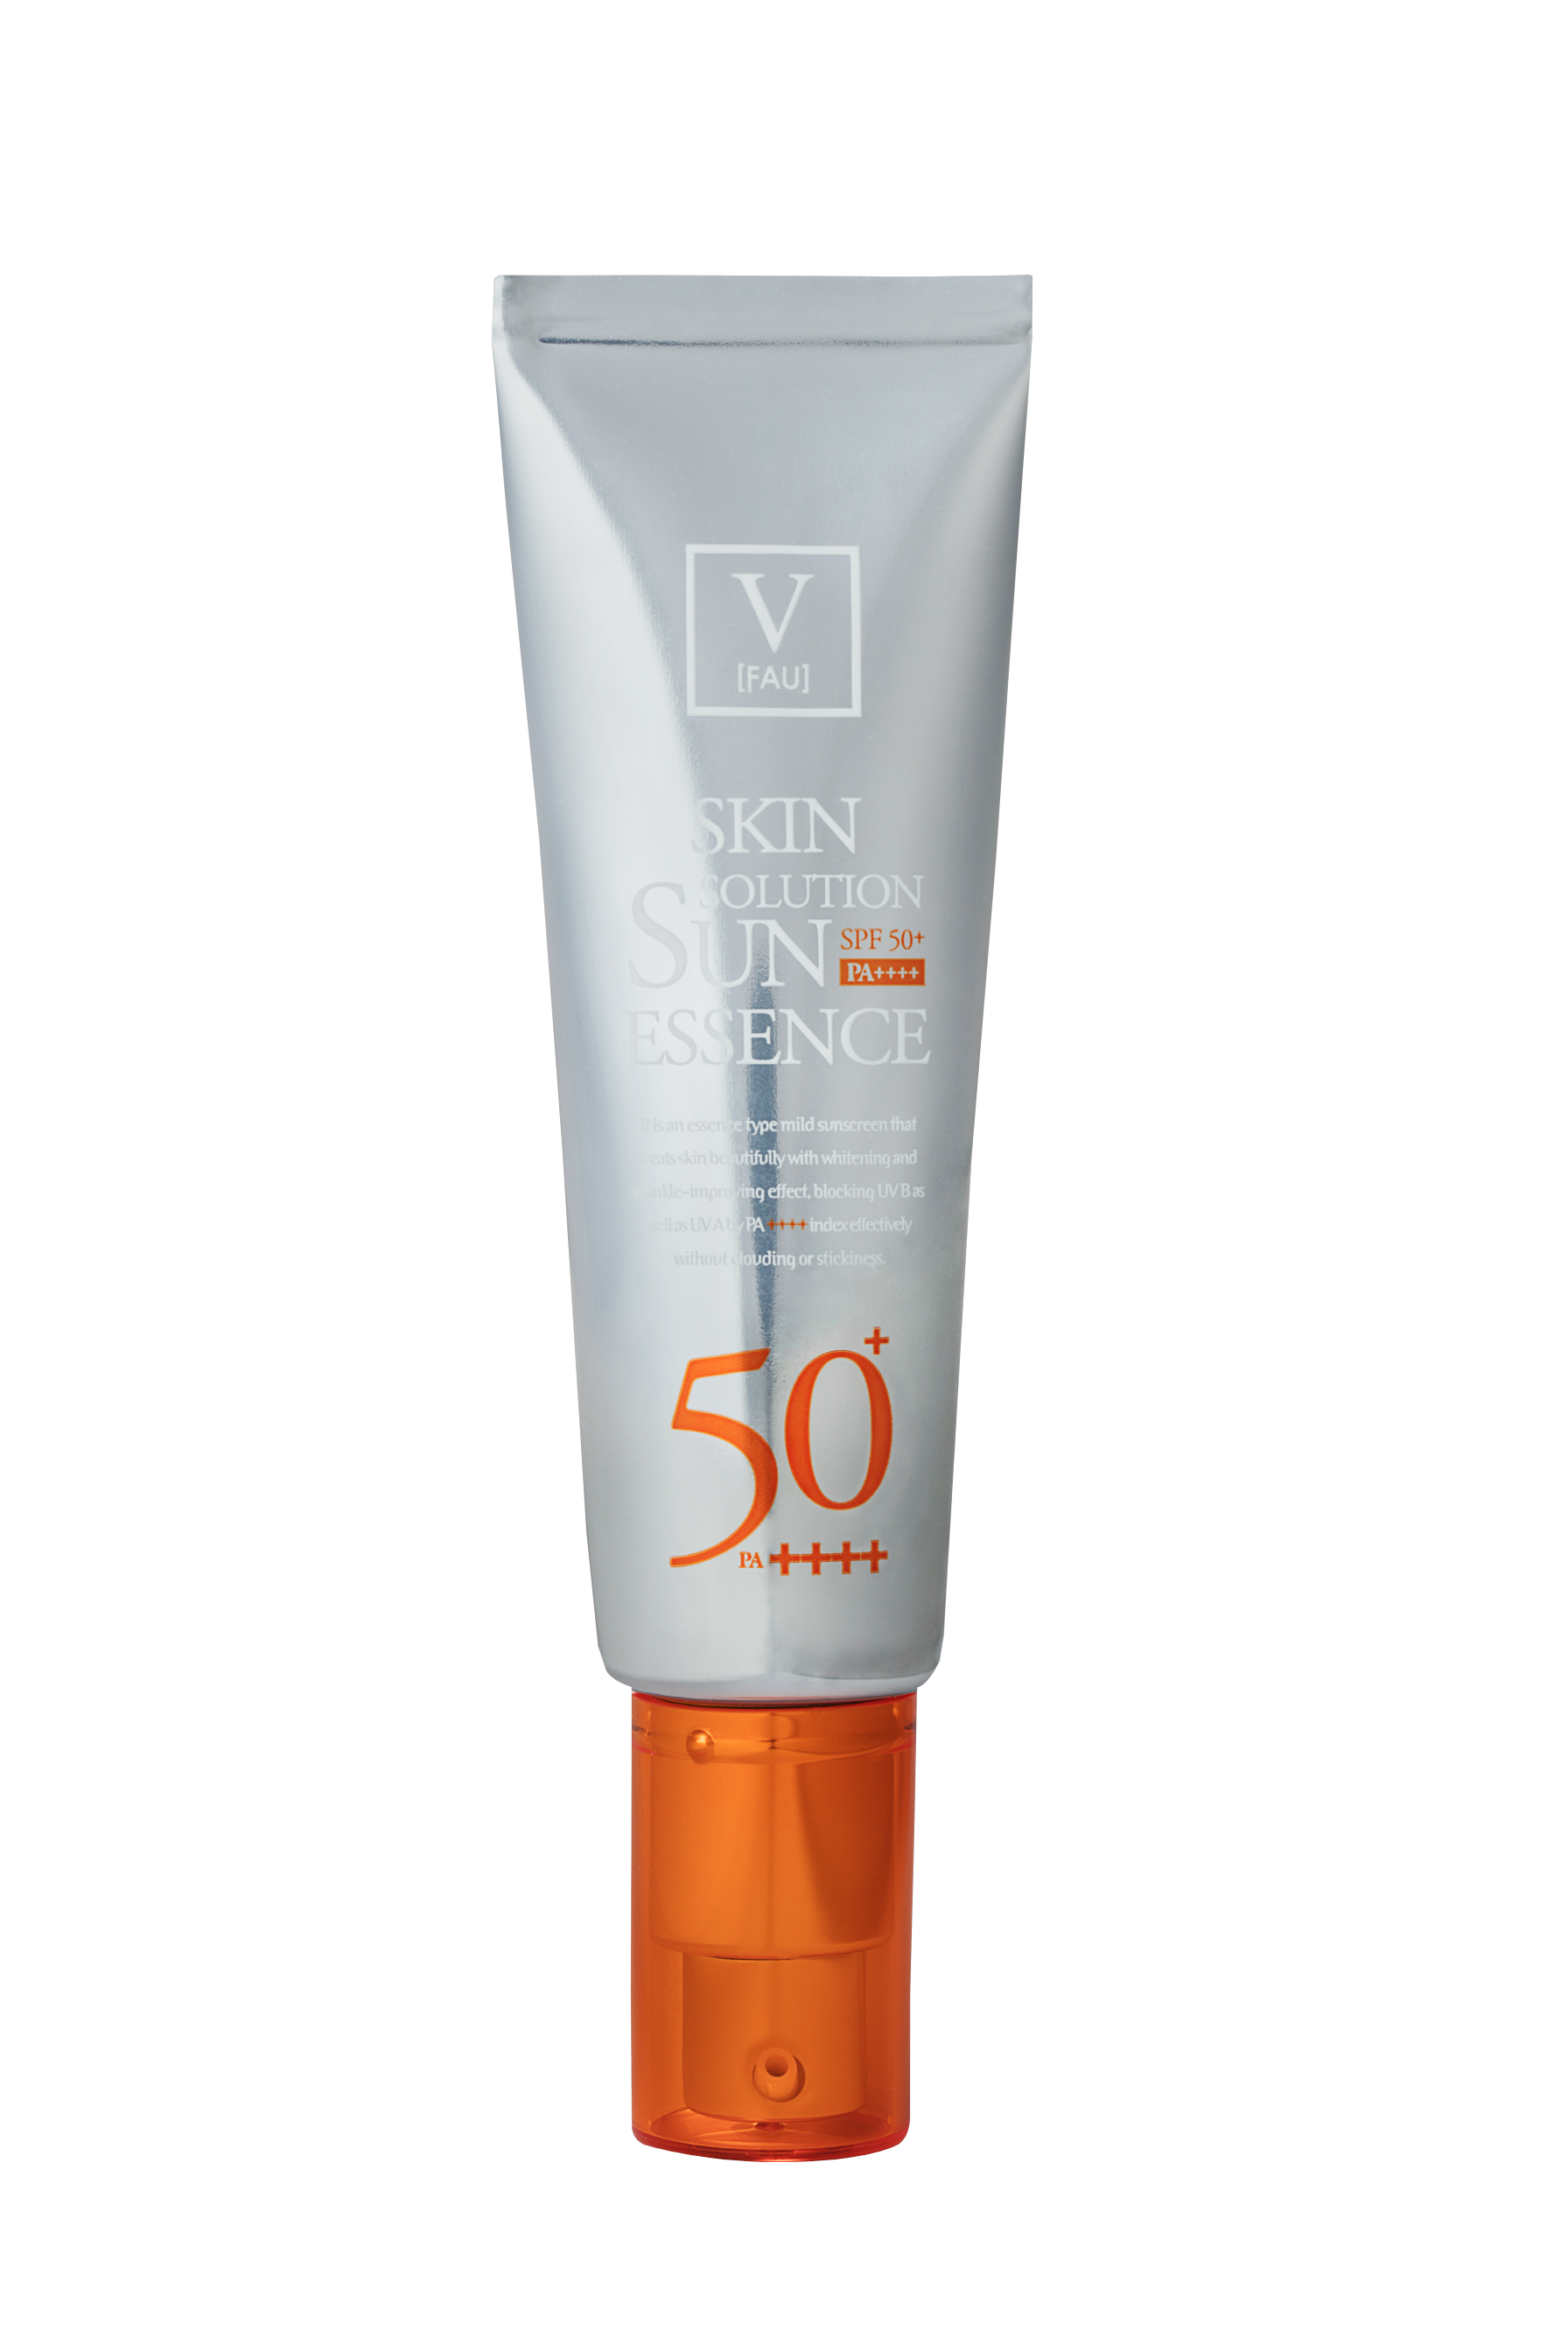 Essence 50 spf. FAU Skin solution Sun Essence. FAU Skin solution Sun Essence SPF 50. V (FAU) Skin solution Sun Essence 30ml солнцезащитный крем. FAU Skin solution Sun Essence SPF 50+ /pa++++.